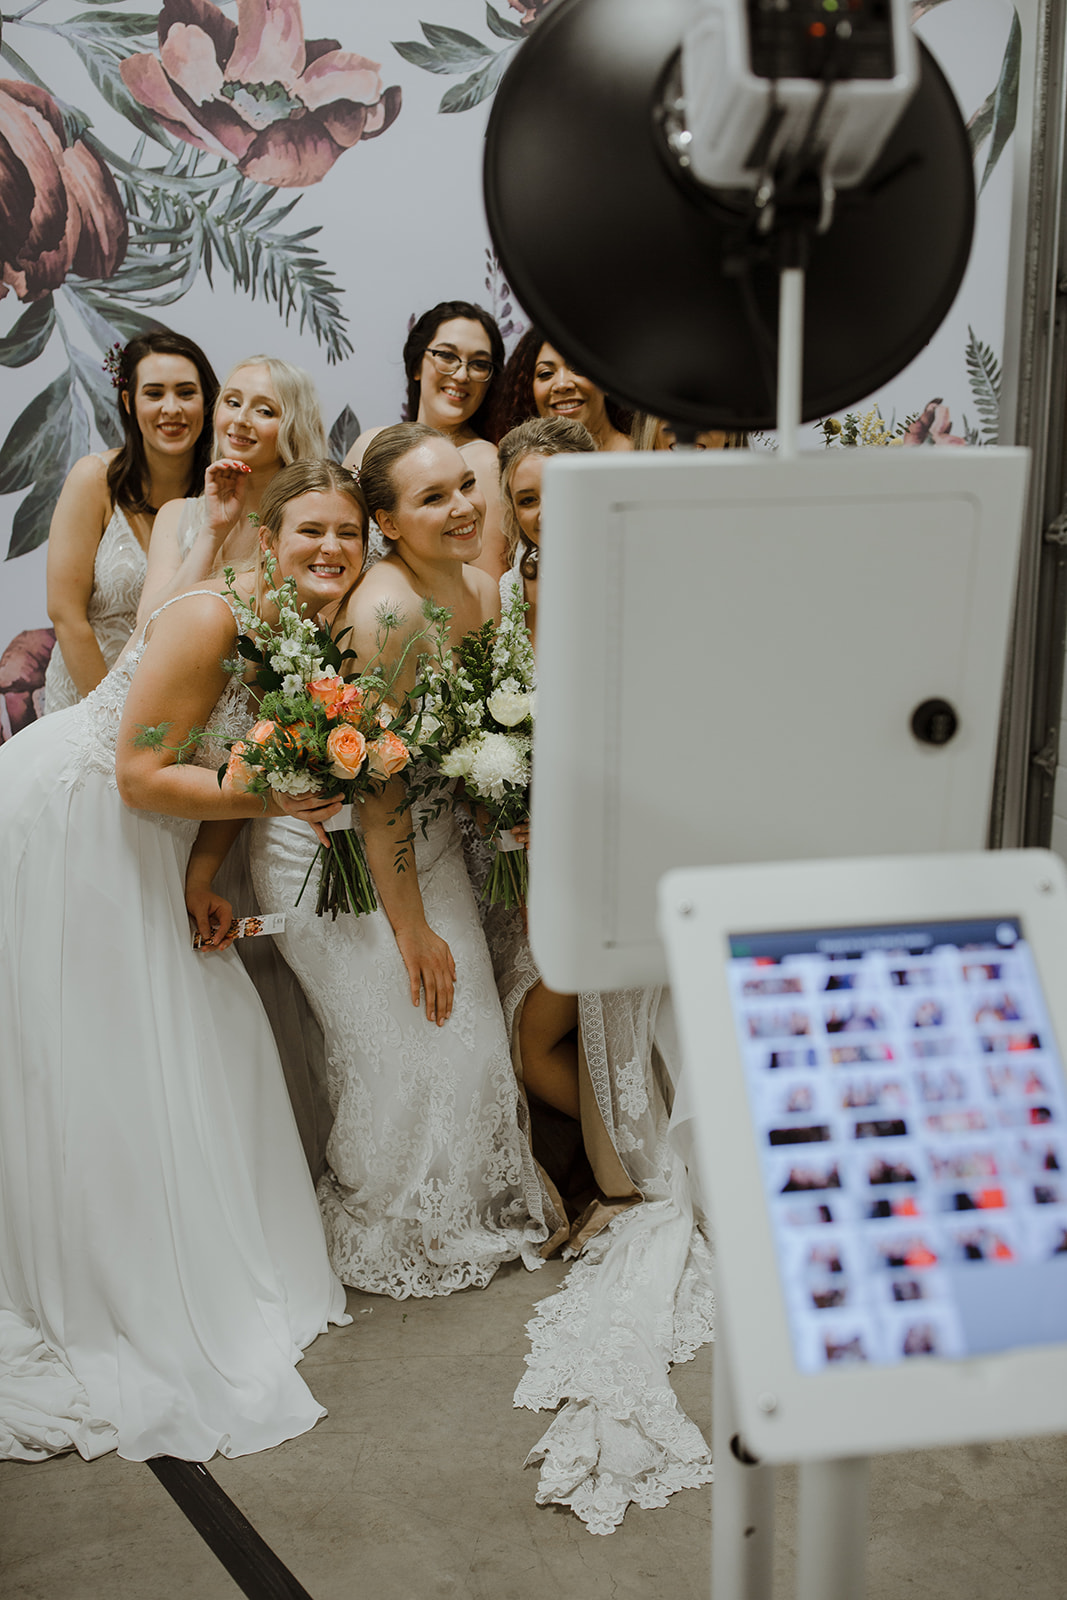 spokane wedding dress fashion show photobooth funny booth all bridal models